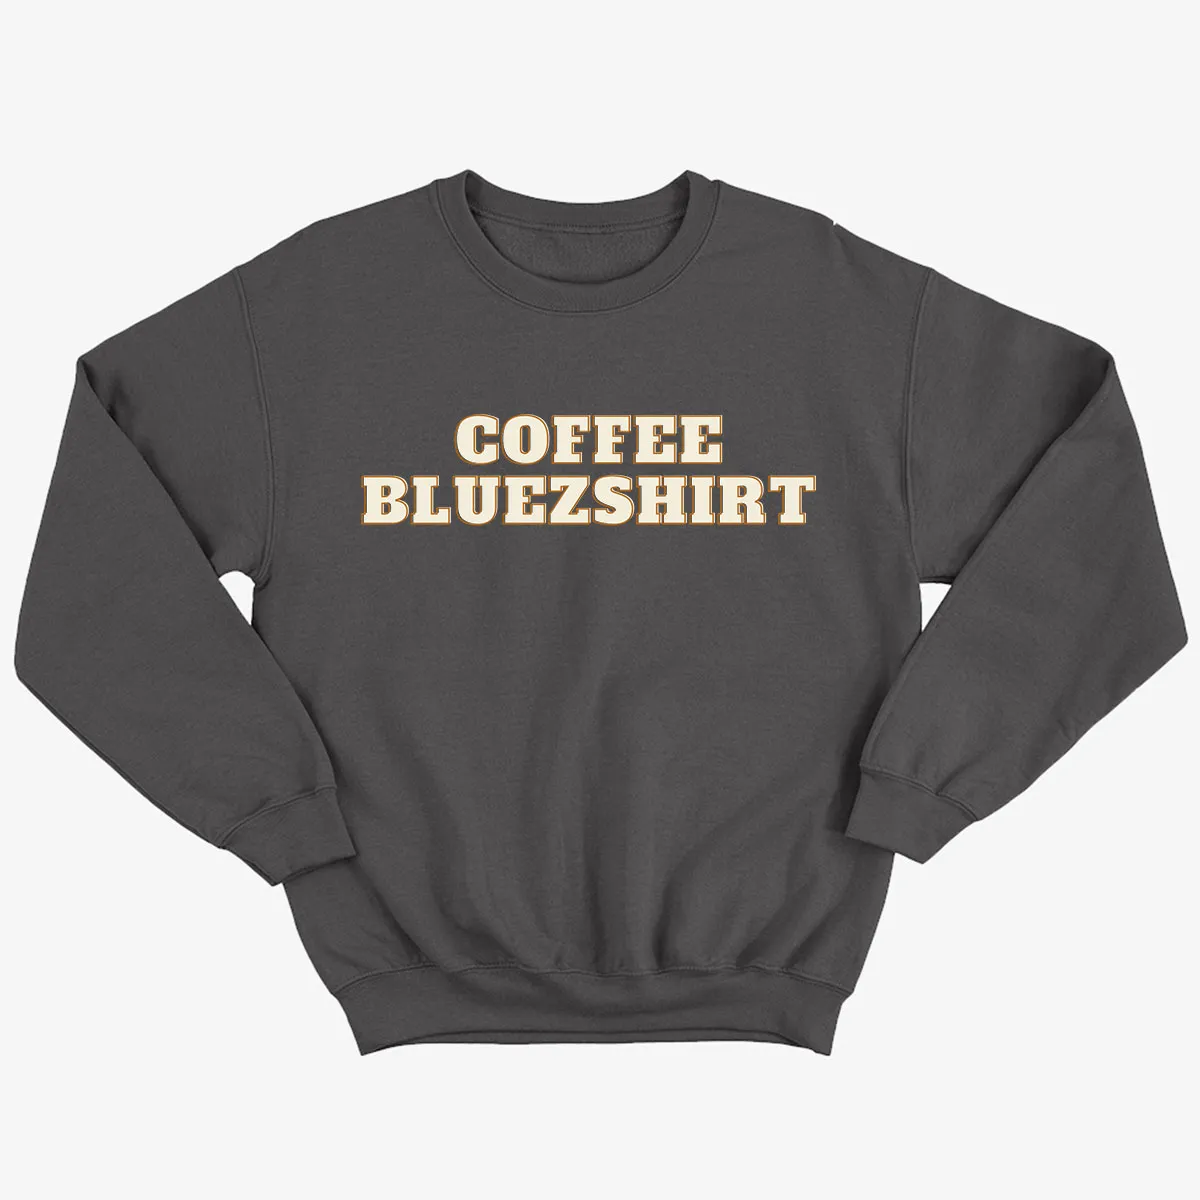 Coffee Bluezshirt Sweatshirt - Black